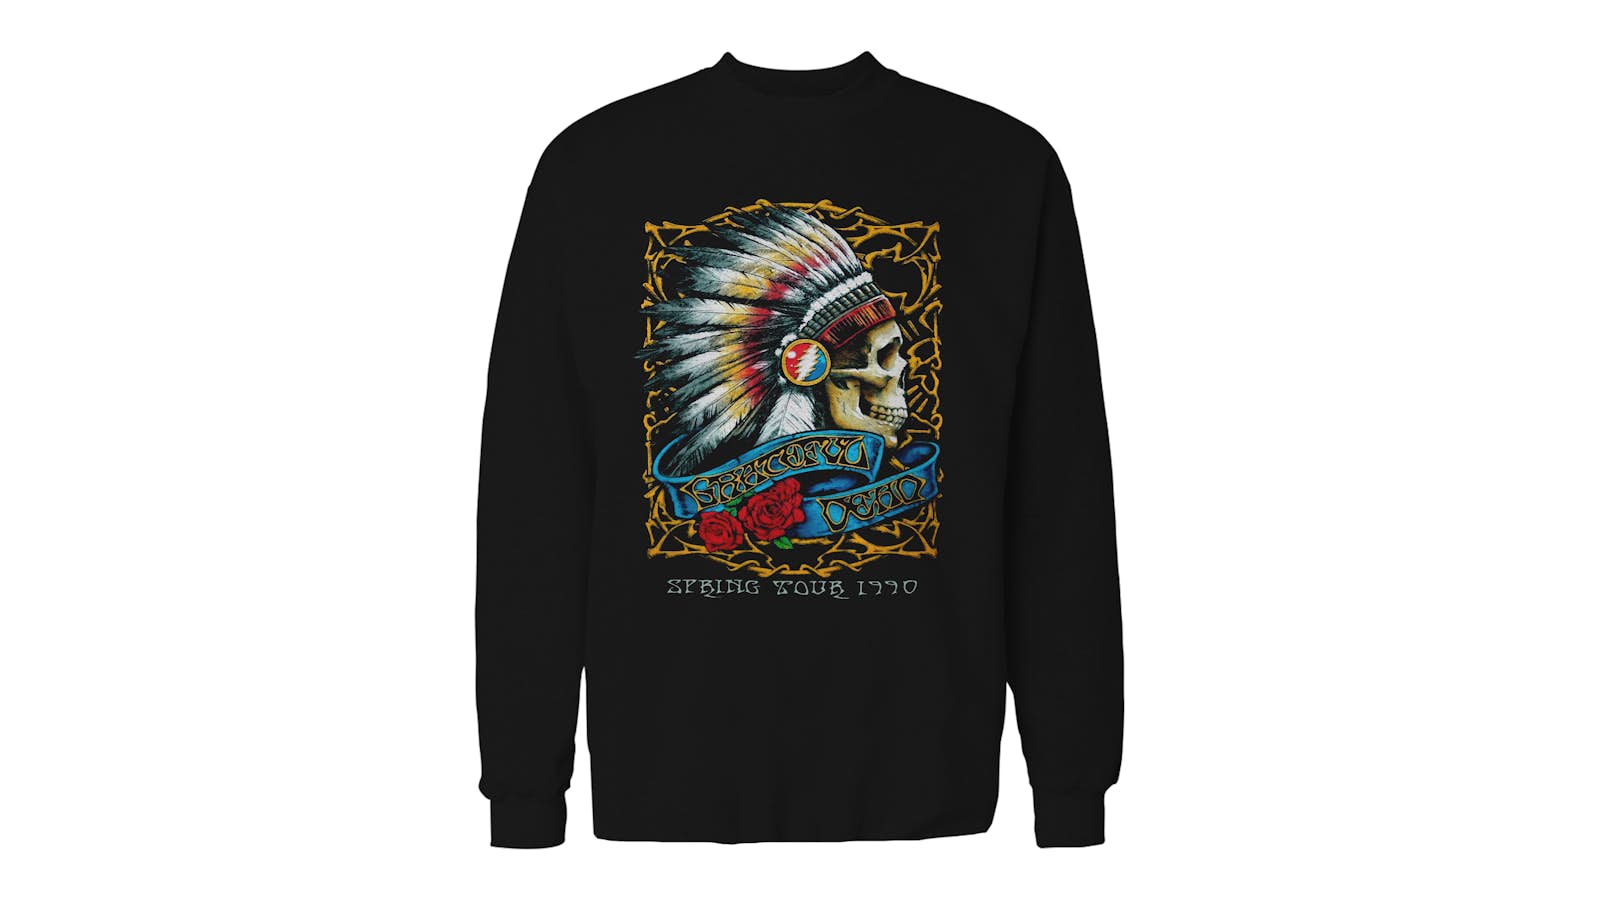 Grateful Dead Long Sleeve Shirt | Spring Tour '90 Grateful Dead ...